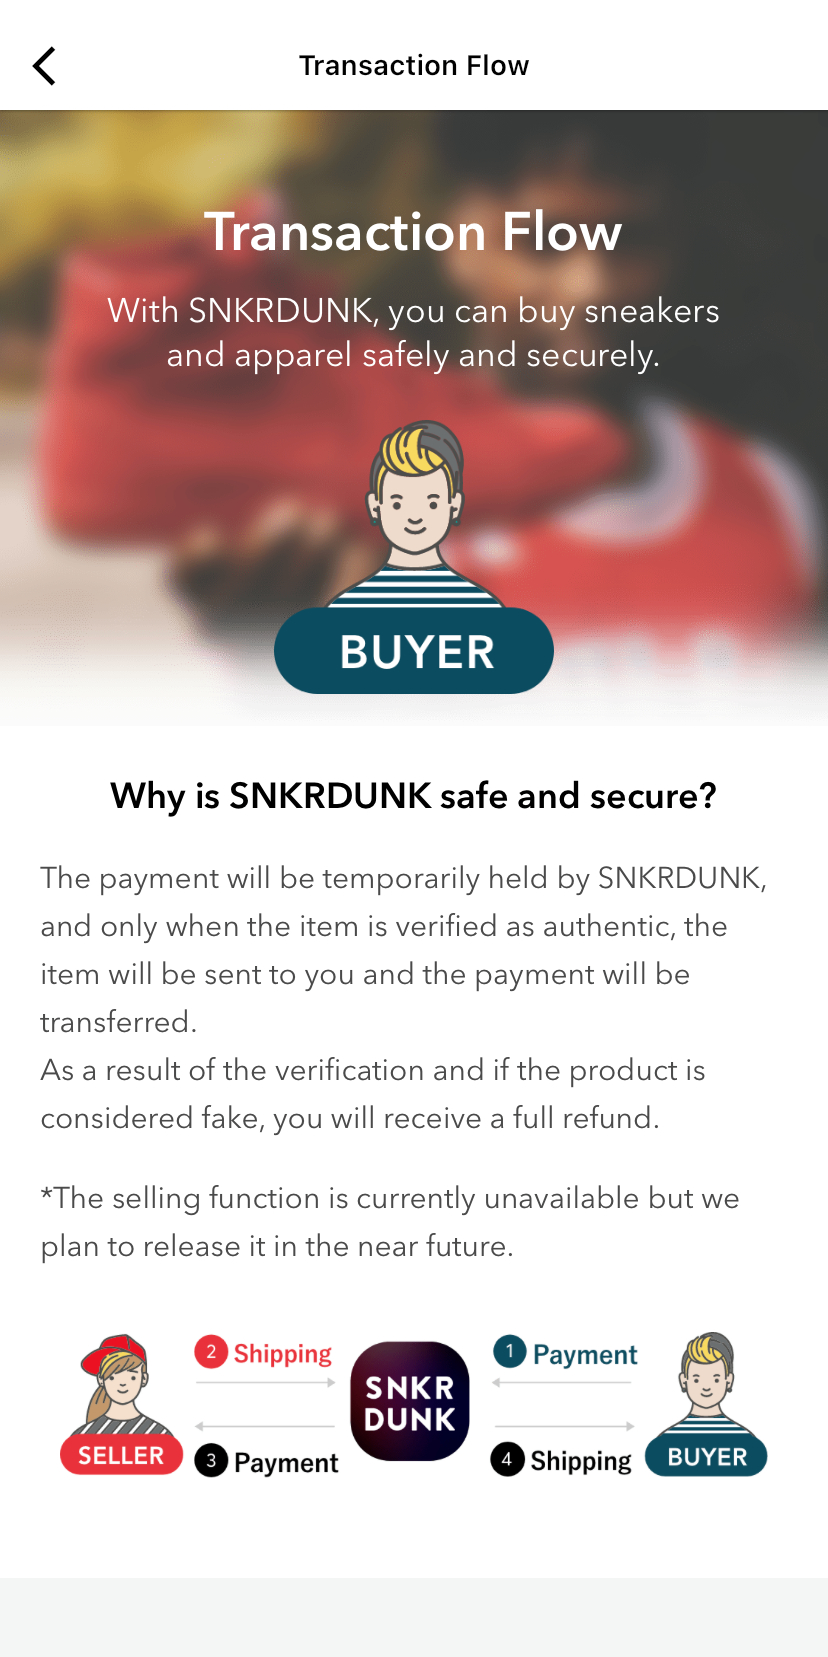 SNKRDUNK Launches Selling Function, SNKRDUNK Launches Selling Function